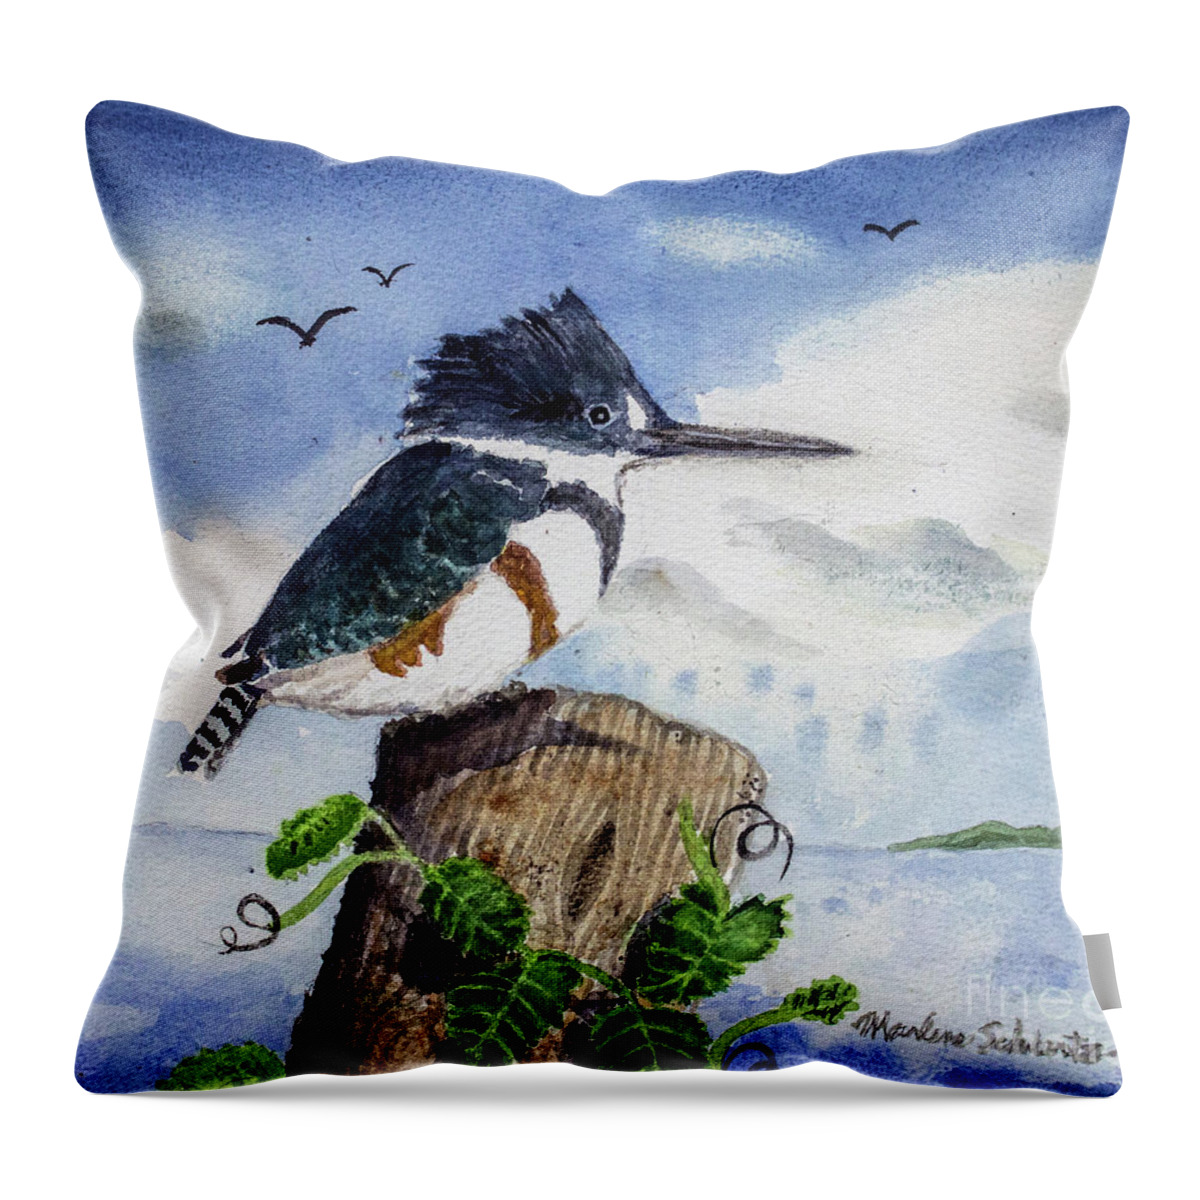 Bird Throw Pillow featuring the painting The Fisher Queen by Marlene Schwartz Massey